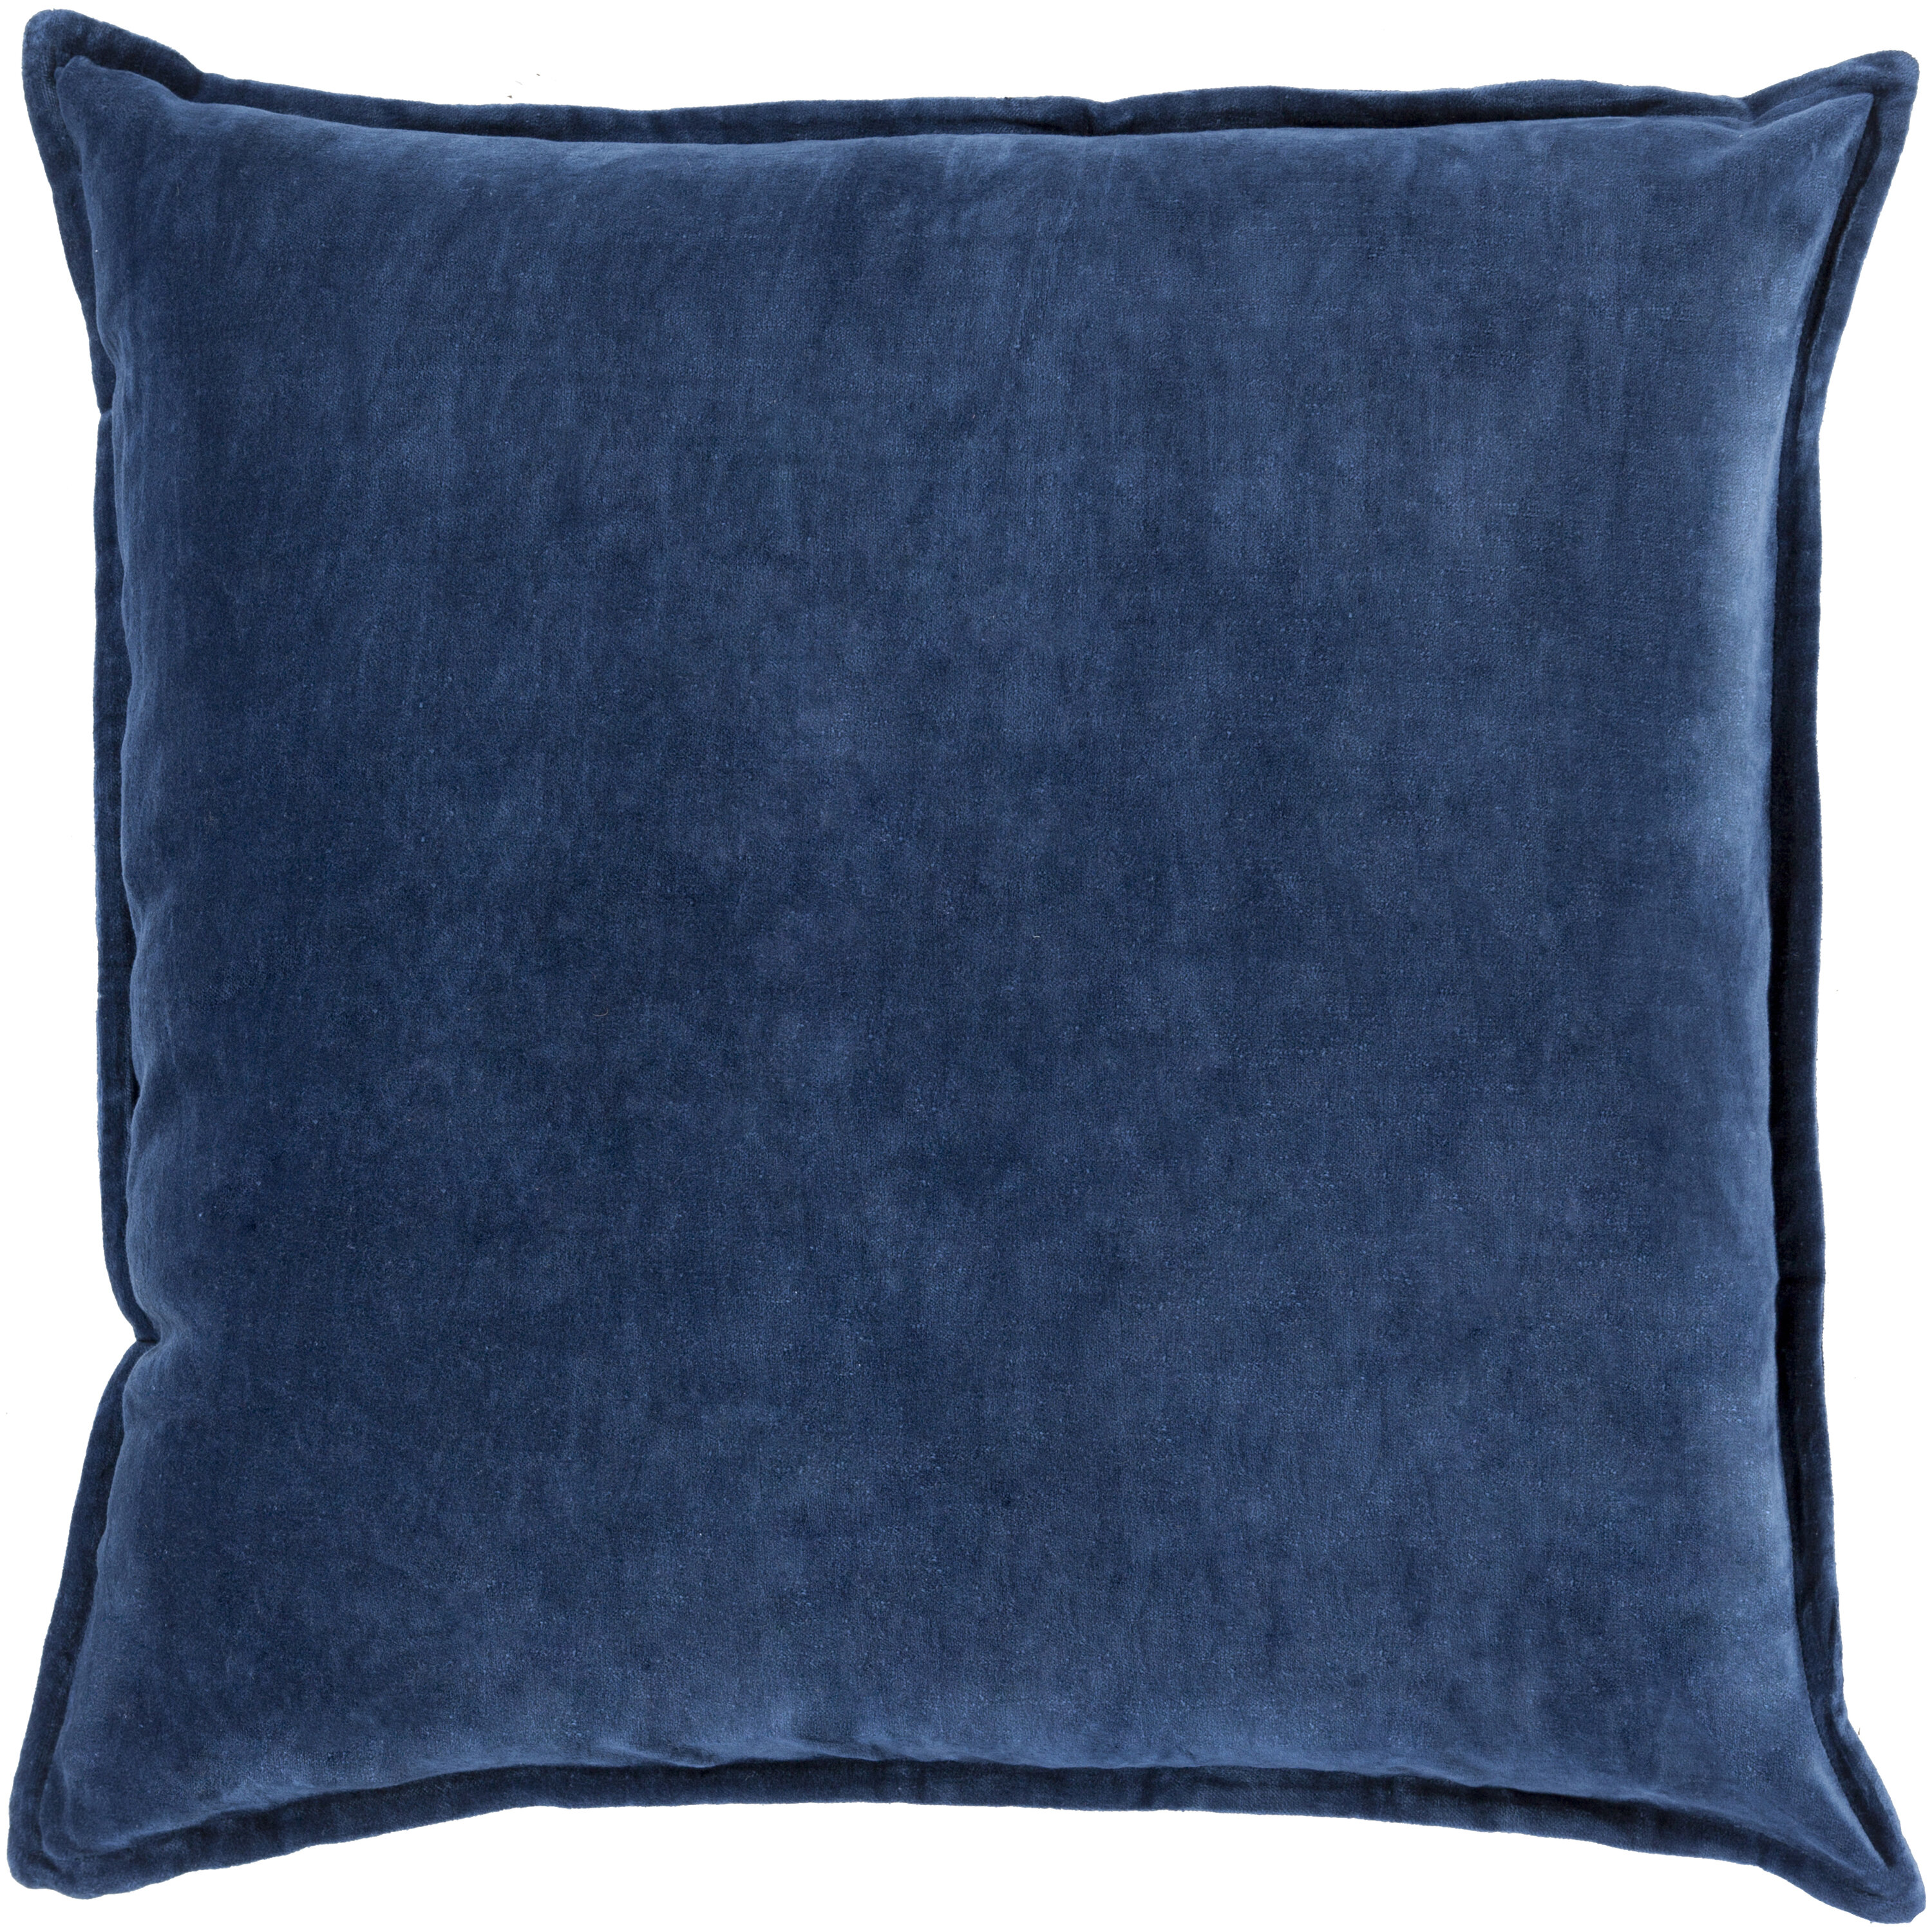 Ткань для подушек купить. Подушка синий. Синяя бархатная подушка. Темно синяя подушка. Подушка декоративная синяя.